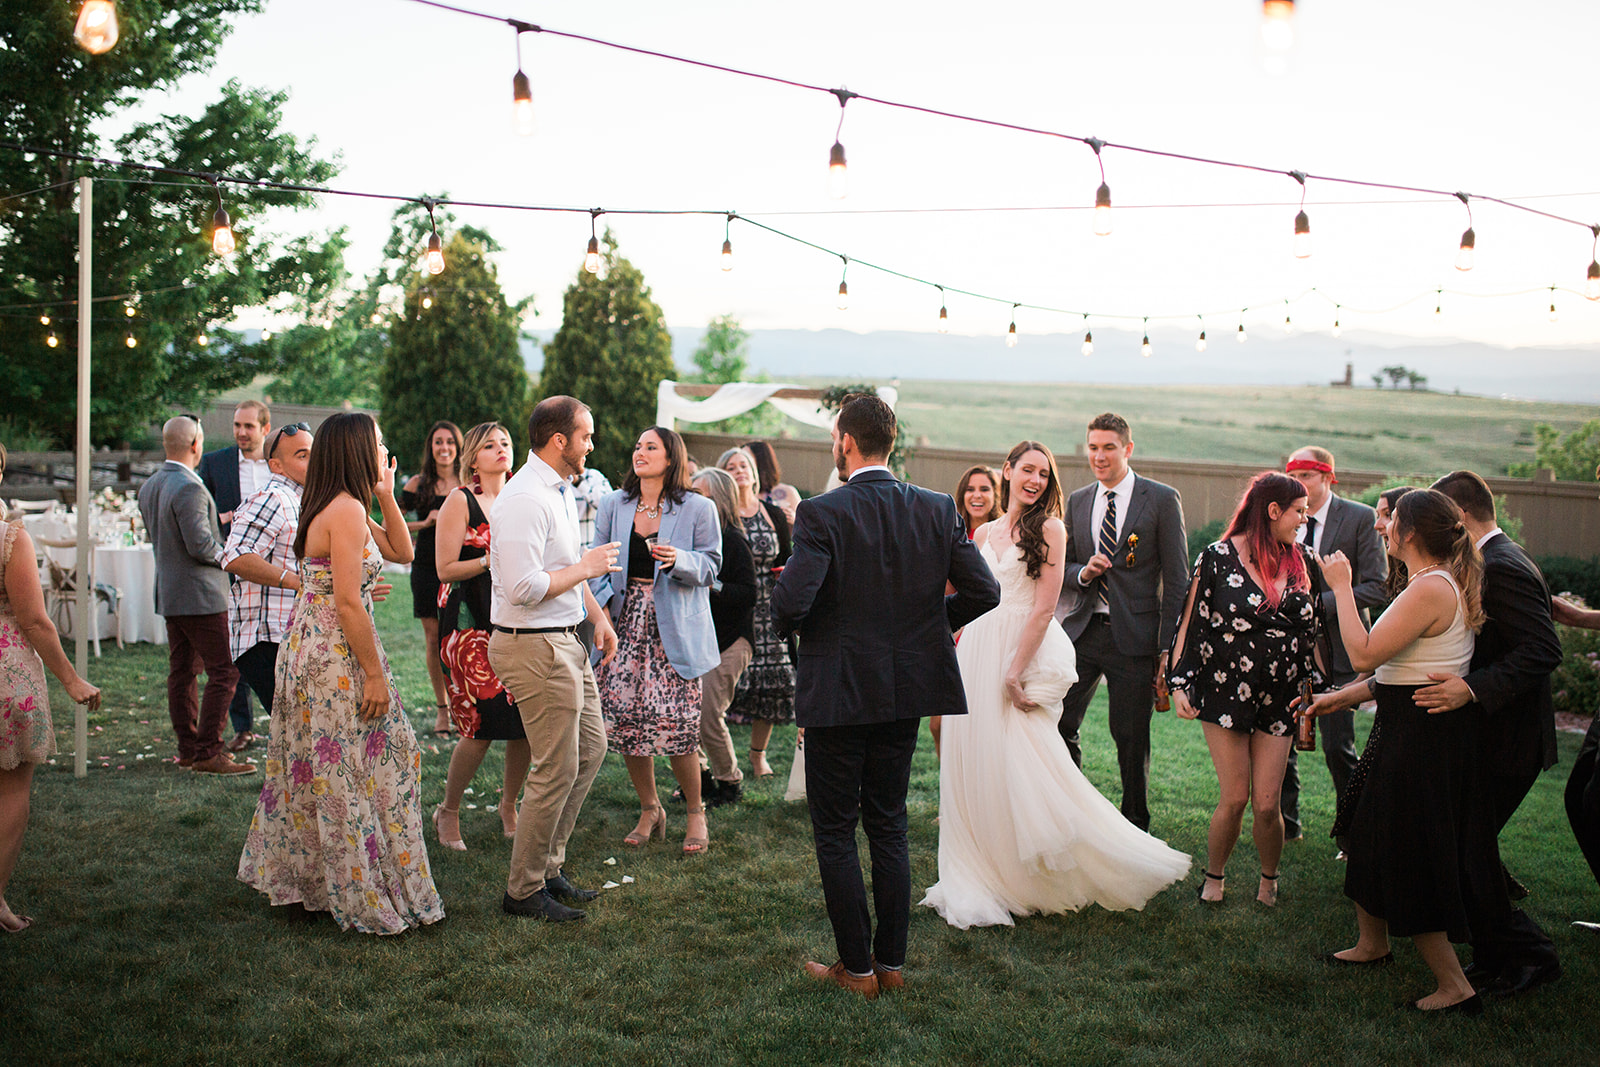 bride groom and guests dancing at intimate backyard wedding reception